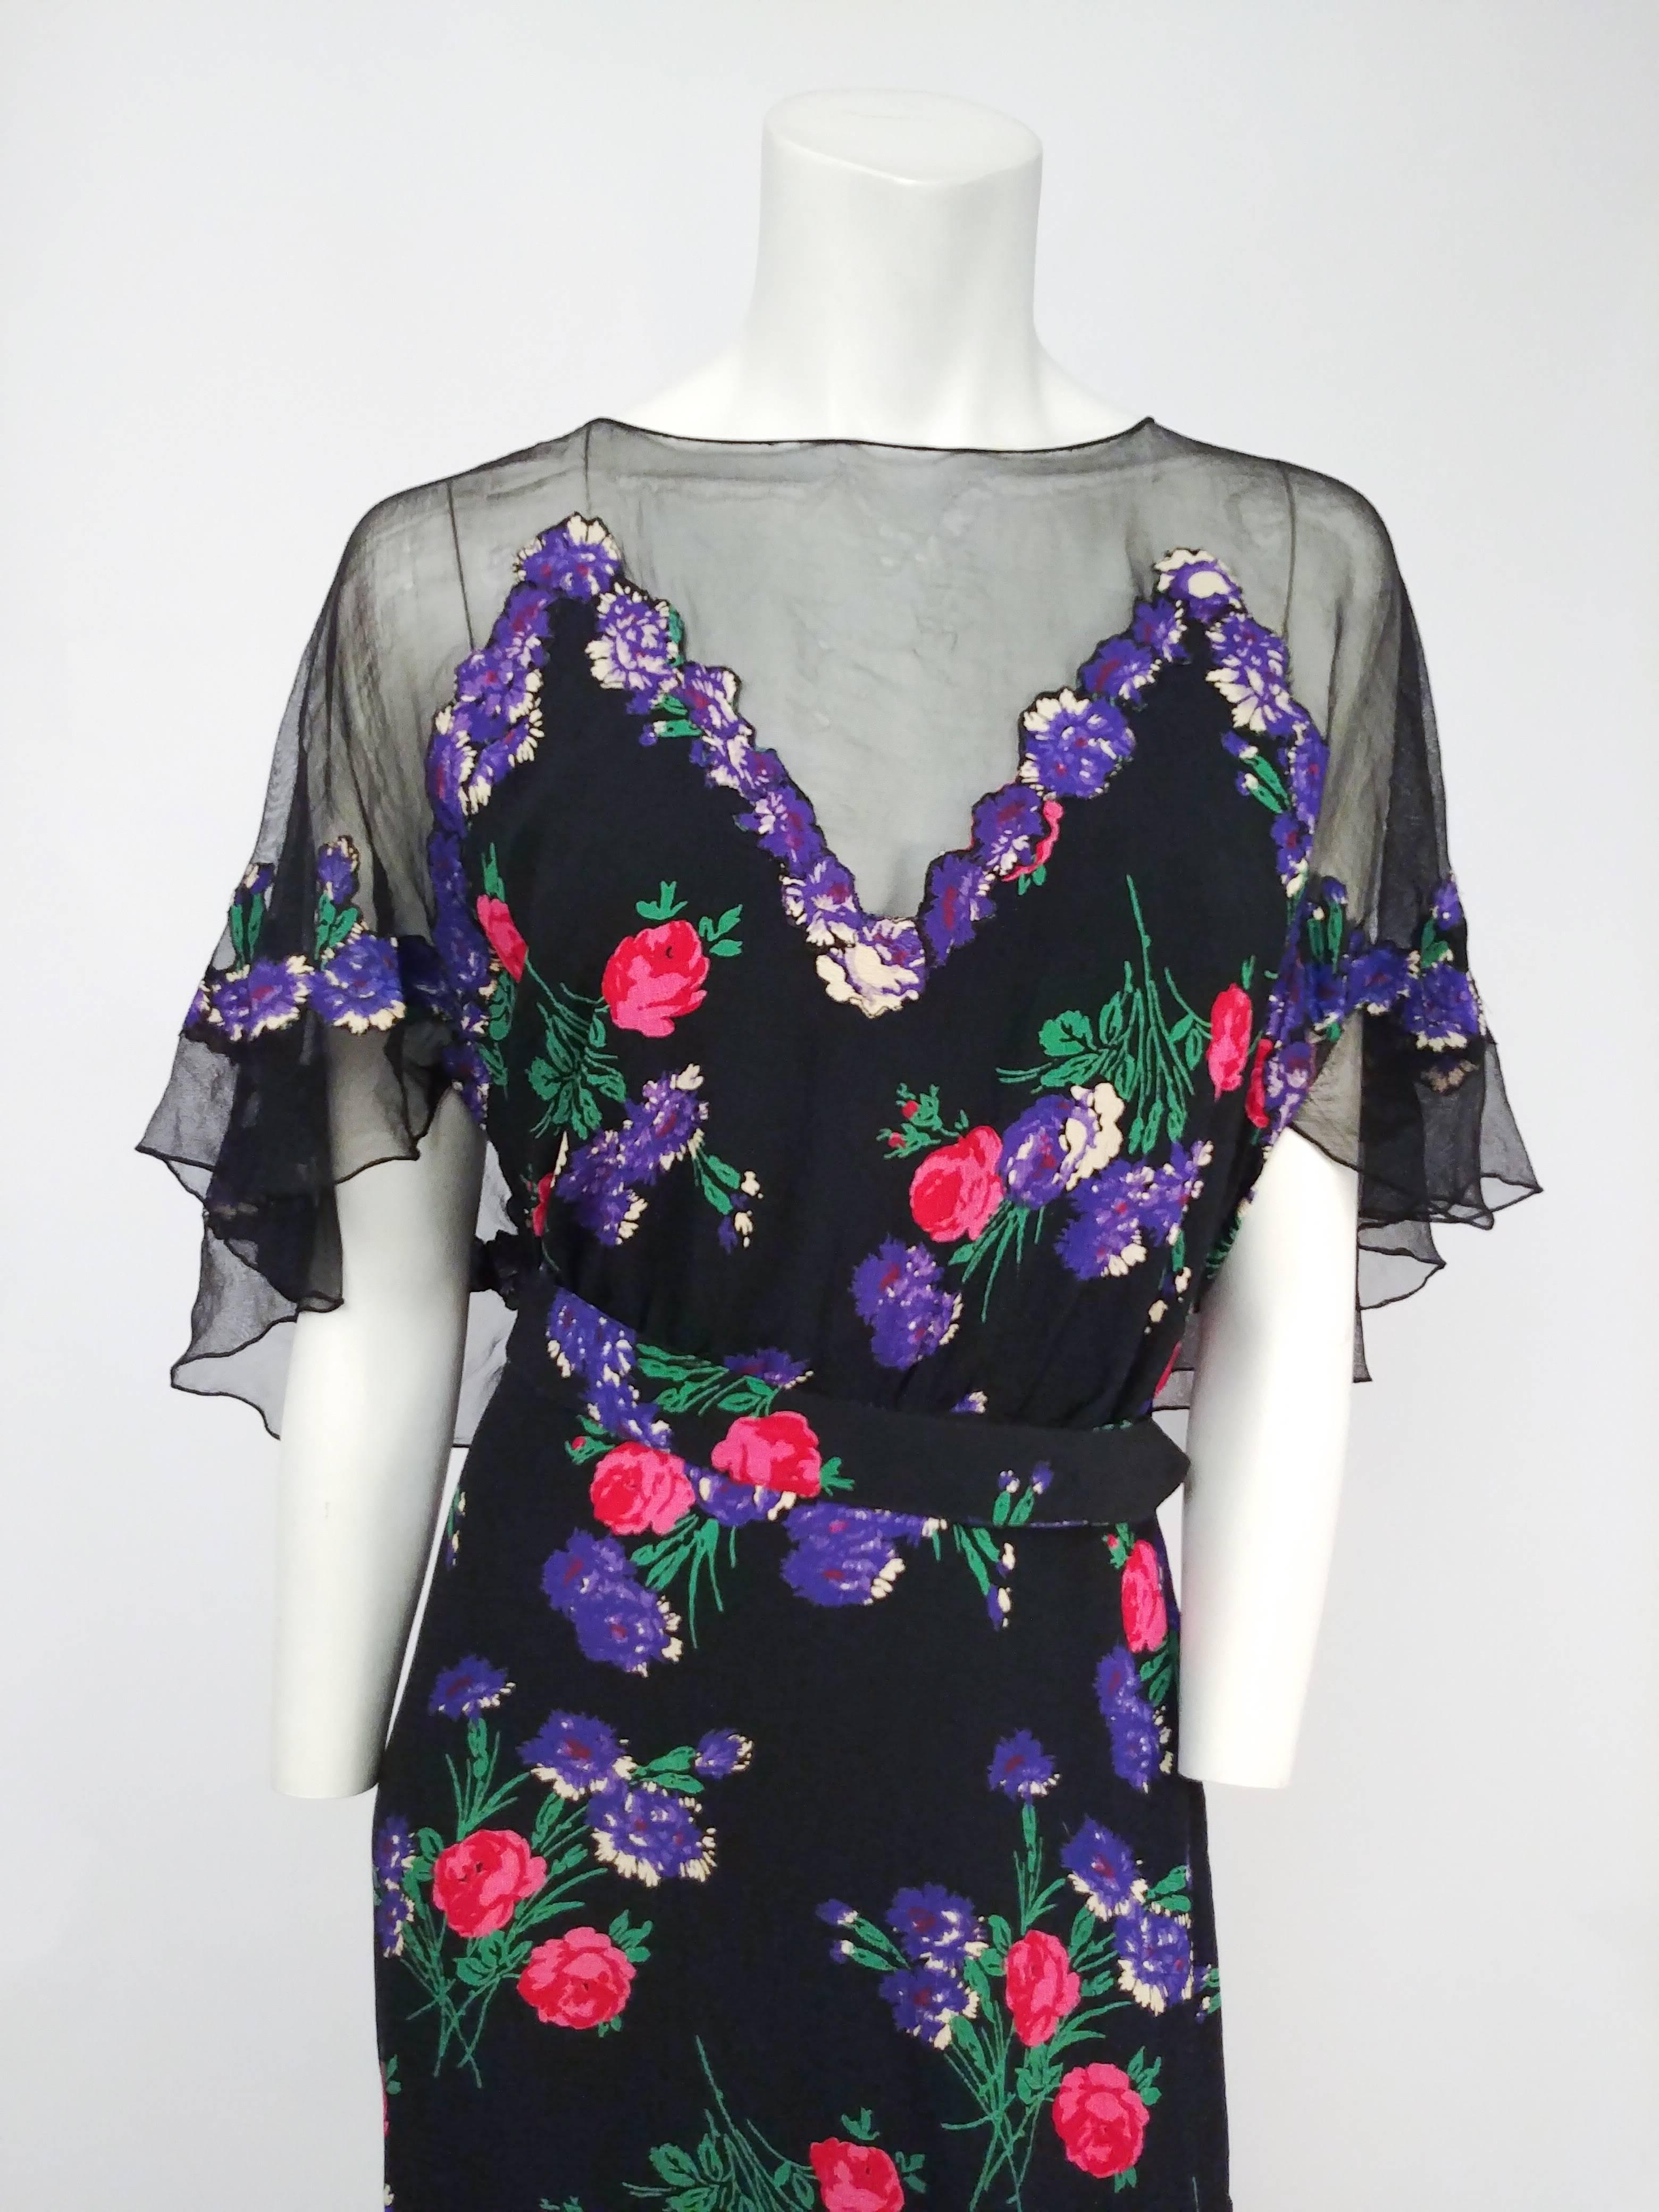 1930s Black Mesh Flower Print Dress. Sheer mesh dress with cut-out flower appliqué, built-in caplet at back. Attached belt. 